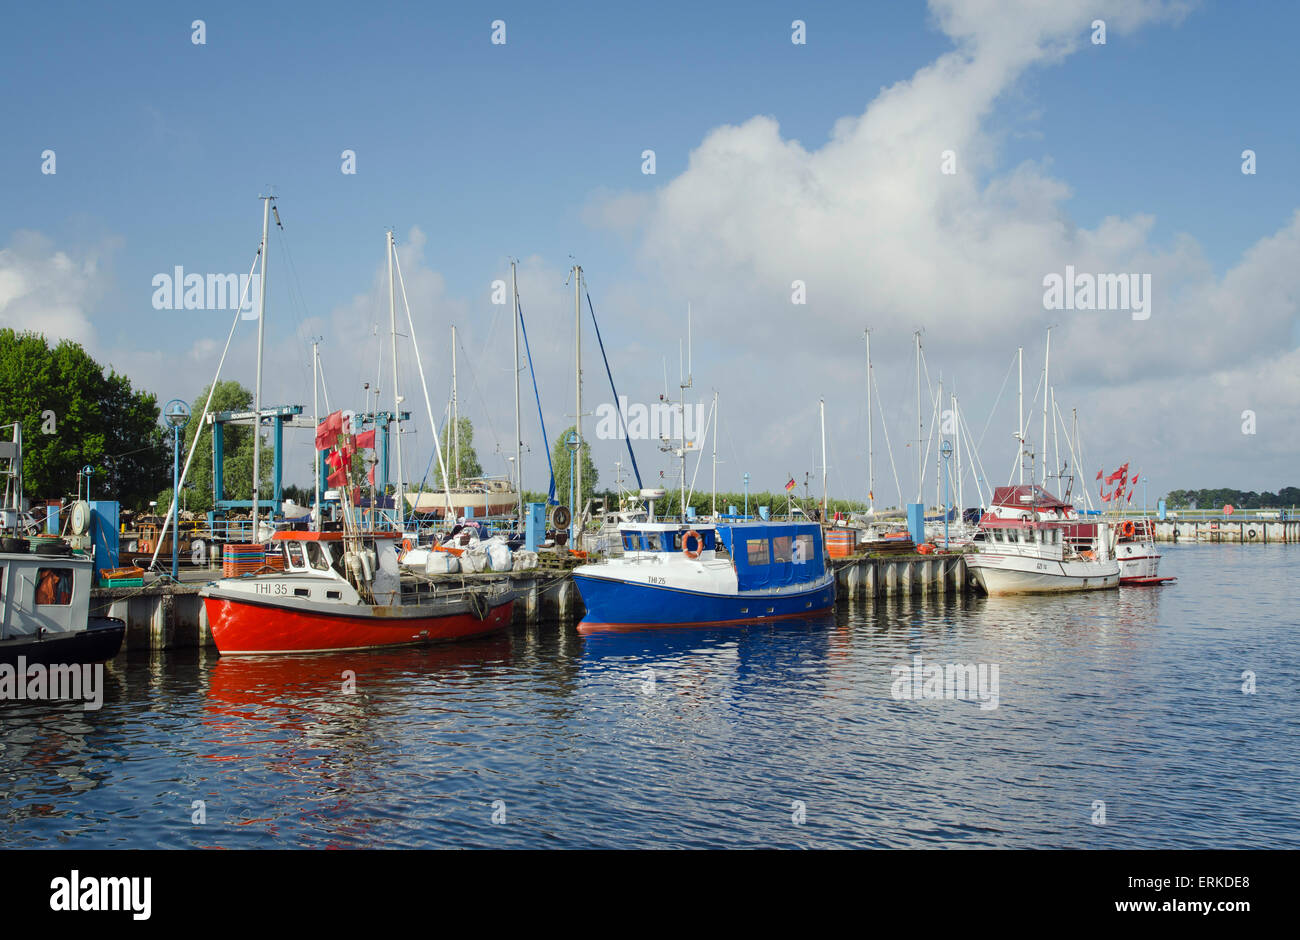 Barche da pesca in porto, Thiessow, Rügen, Mar Baltico, Meclemburgo-Pomerania, Germania Foto Stock